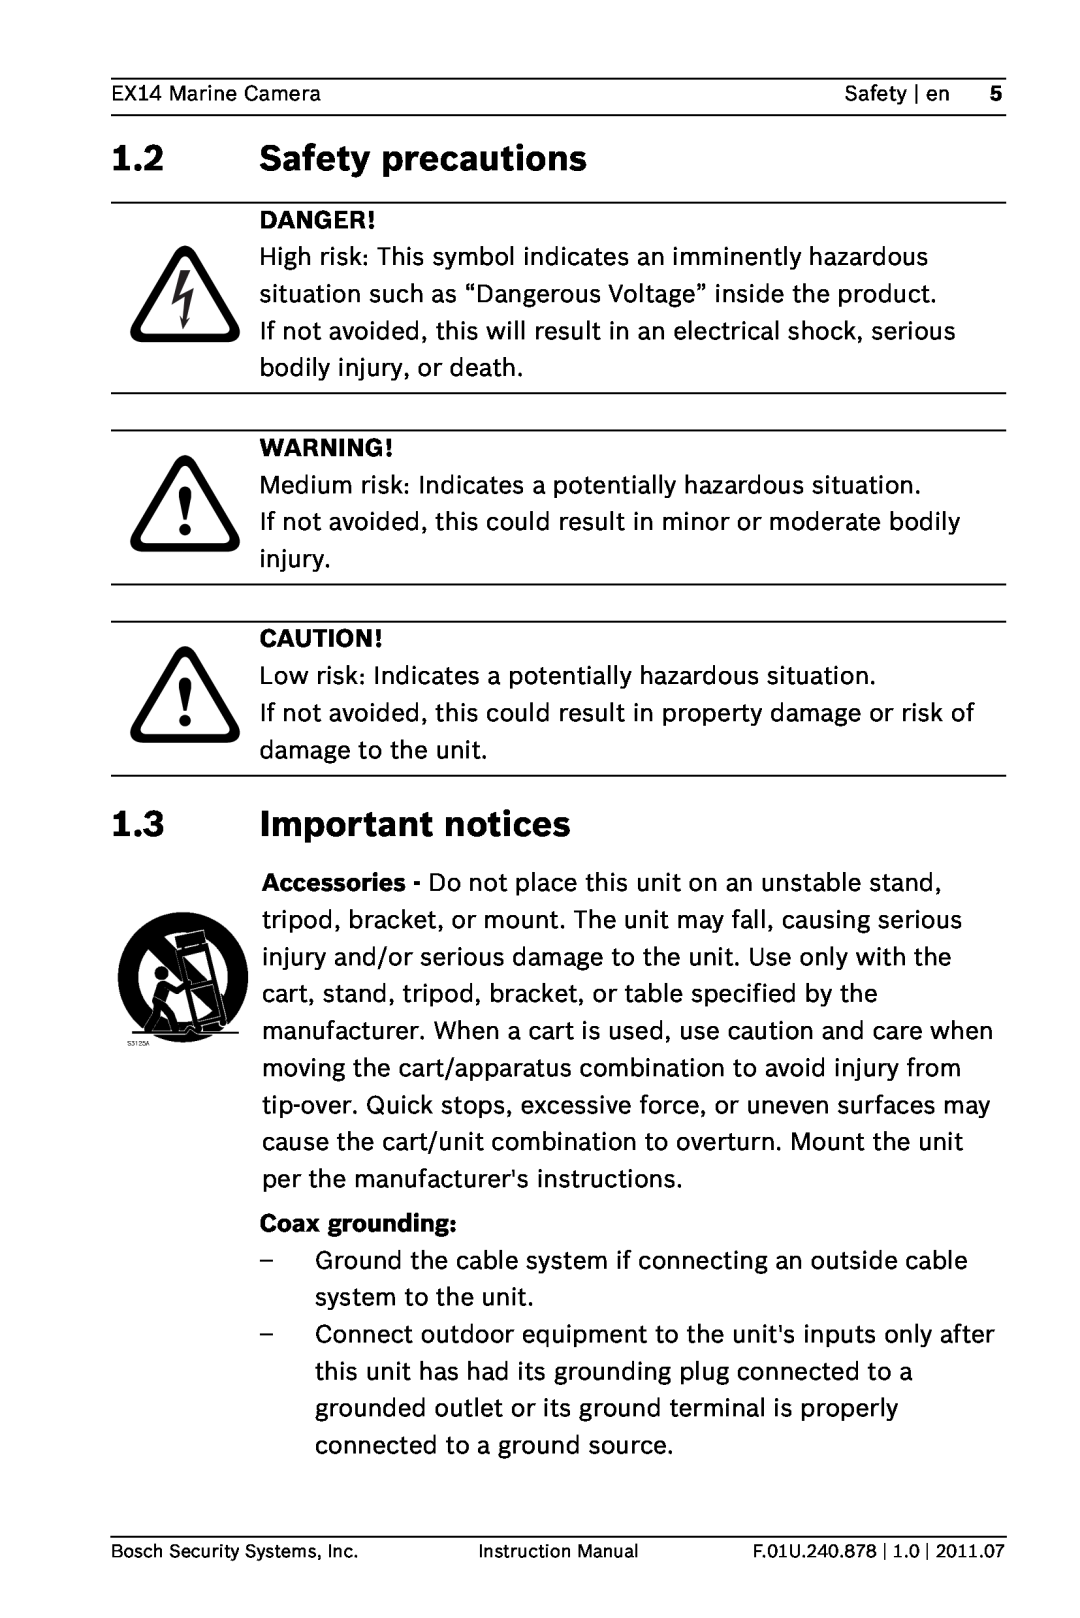 Bosch Appliances EX14 instruction manual Safety precautions, Important notices, Danger, Coax grounding 